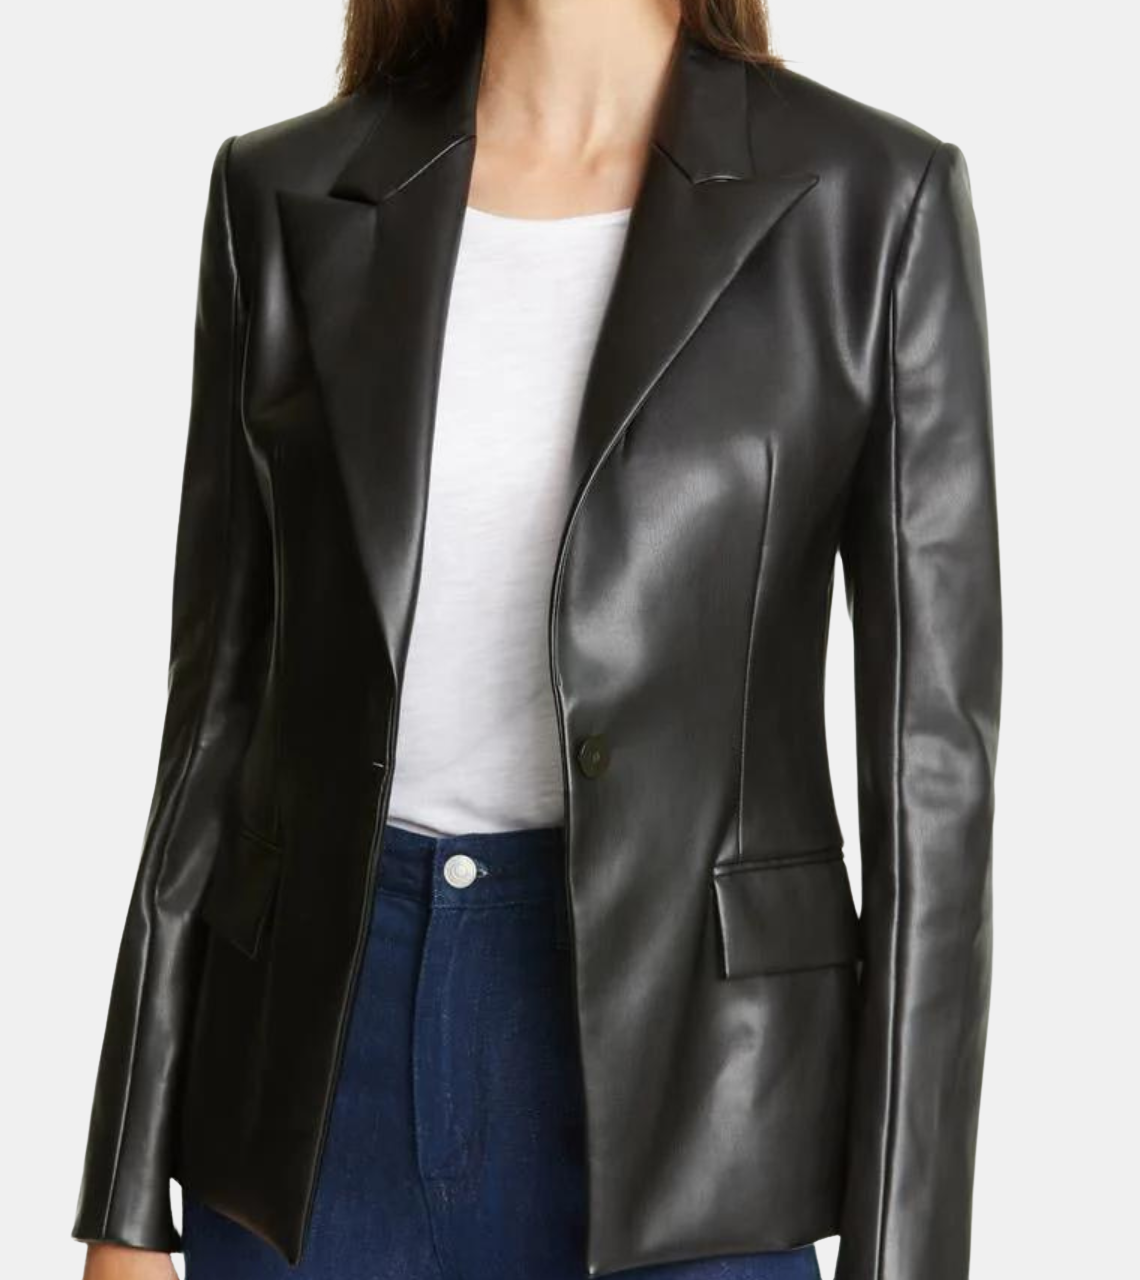 Celine Women's Black Leather Blazer